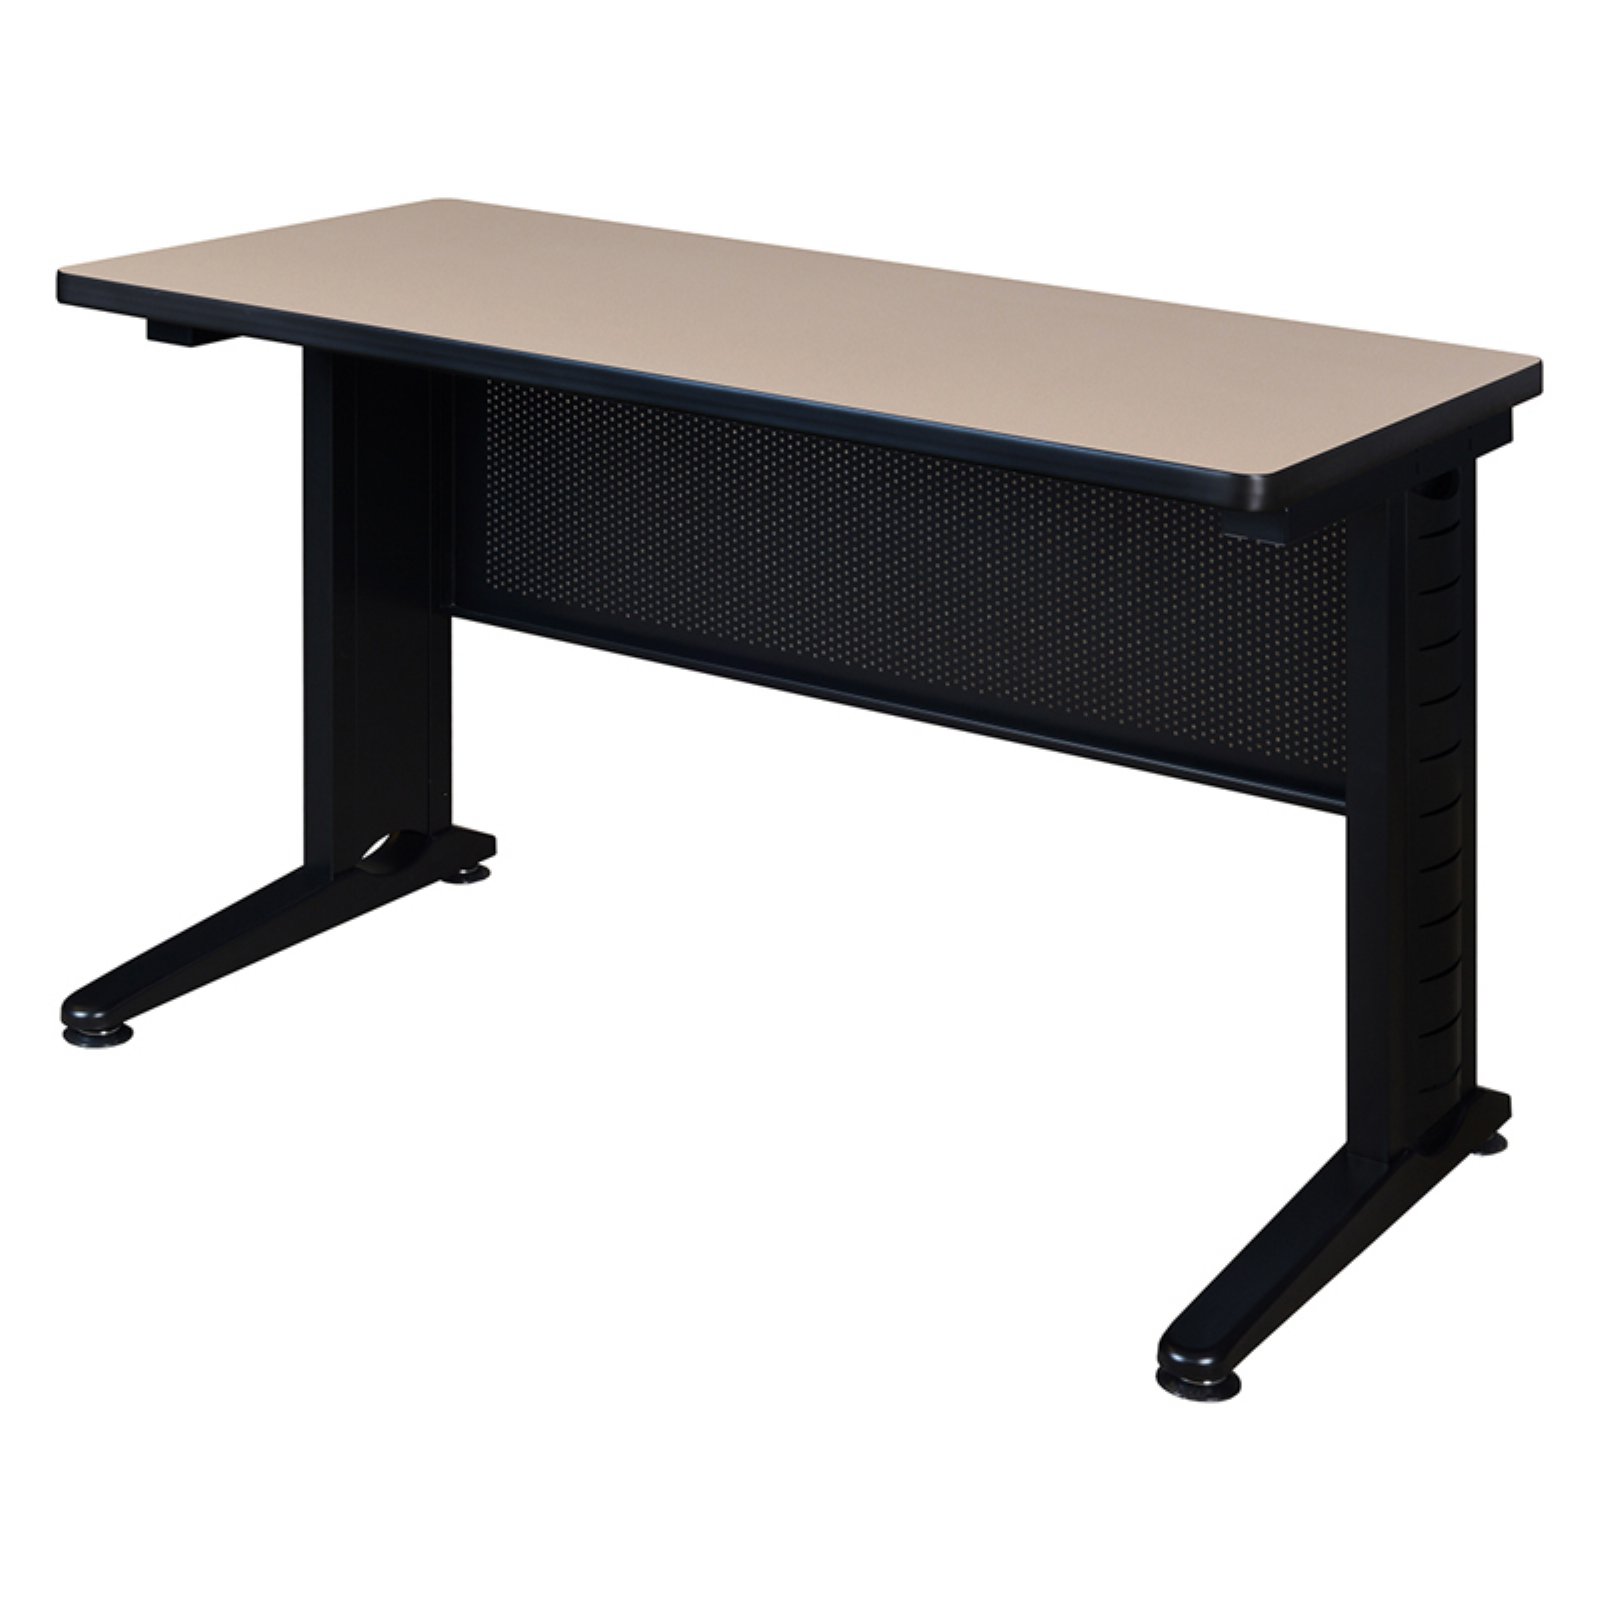 Regency Seating 84" x 24" Training Table, Melamine Laminate Table Top - image 2 of 2